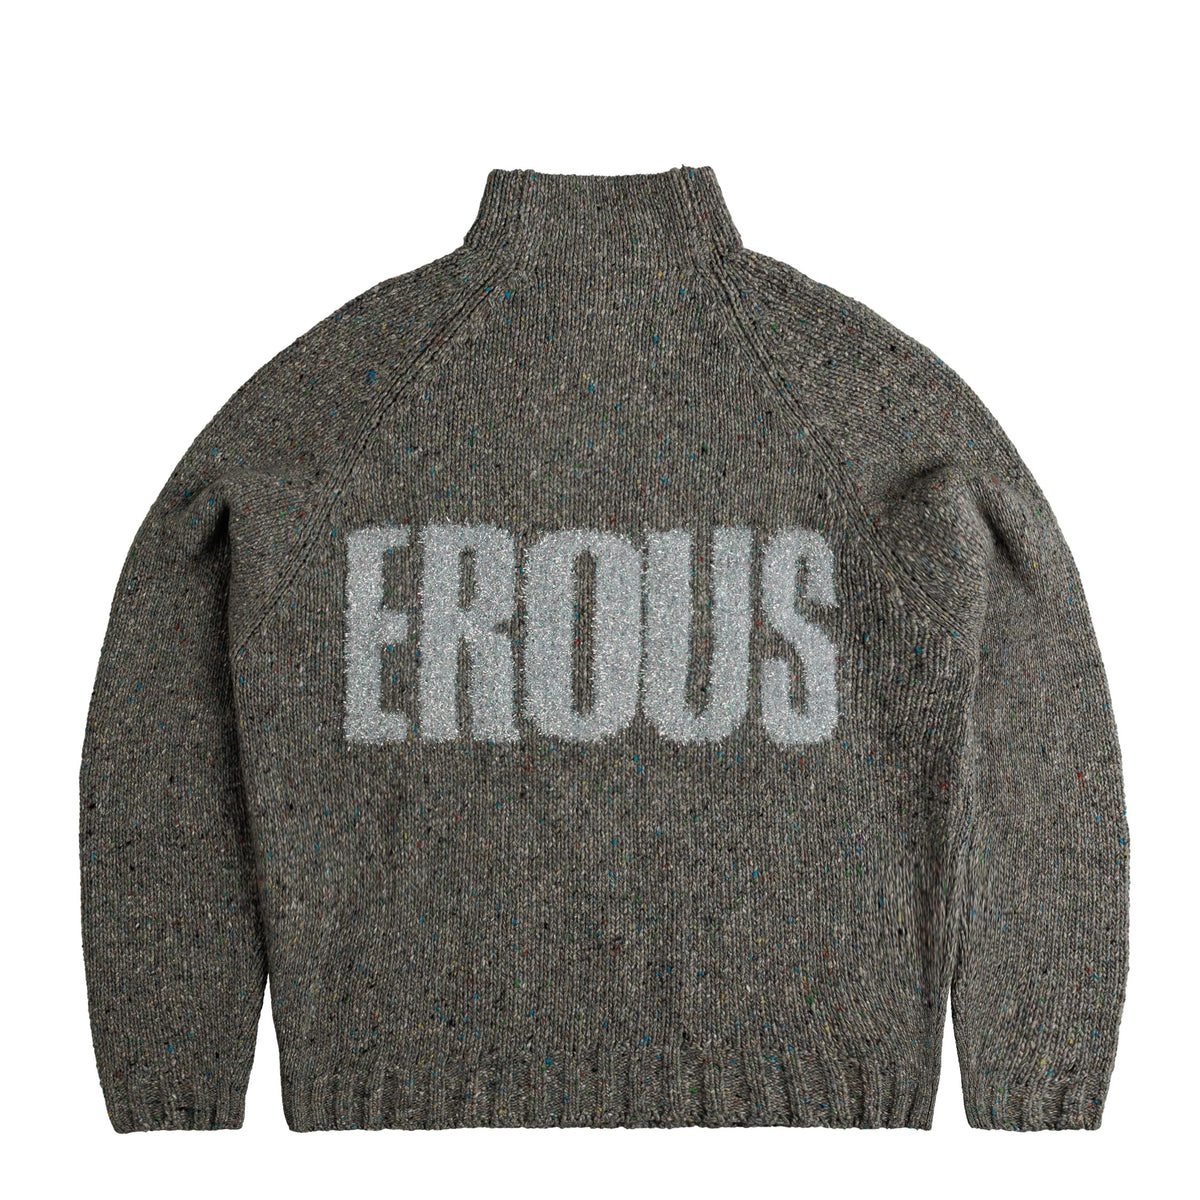 ERL Dangerous Sweater » Buy online now!